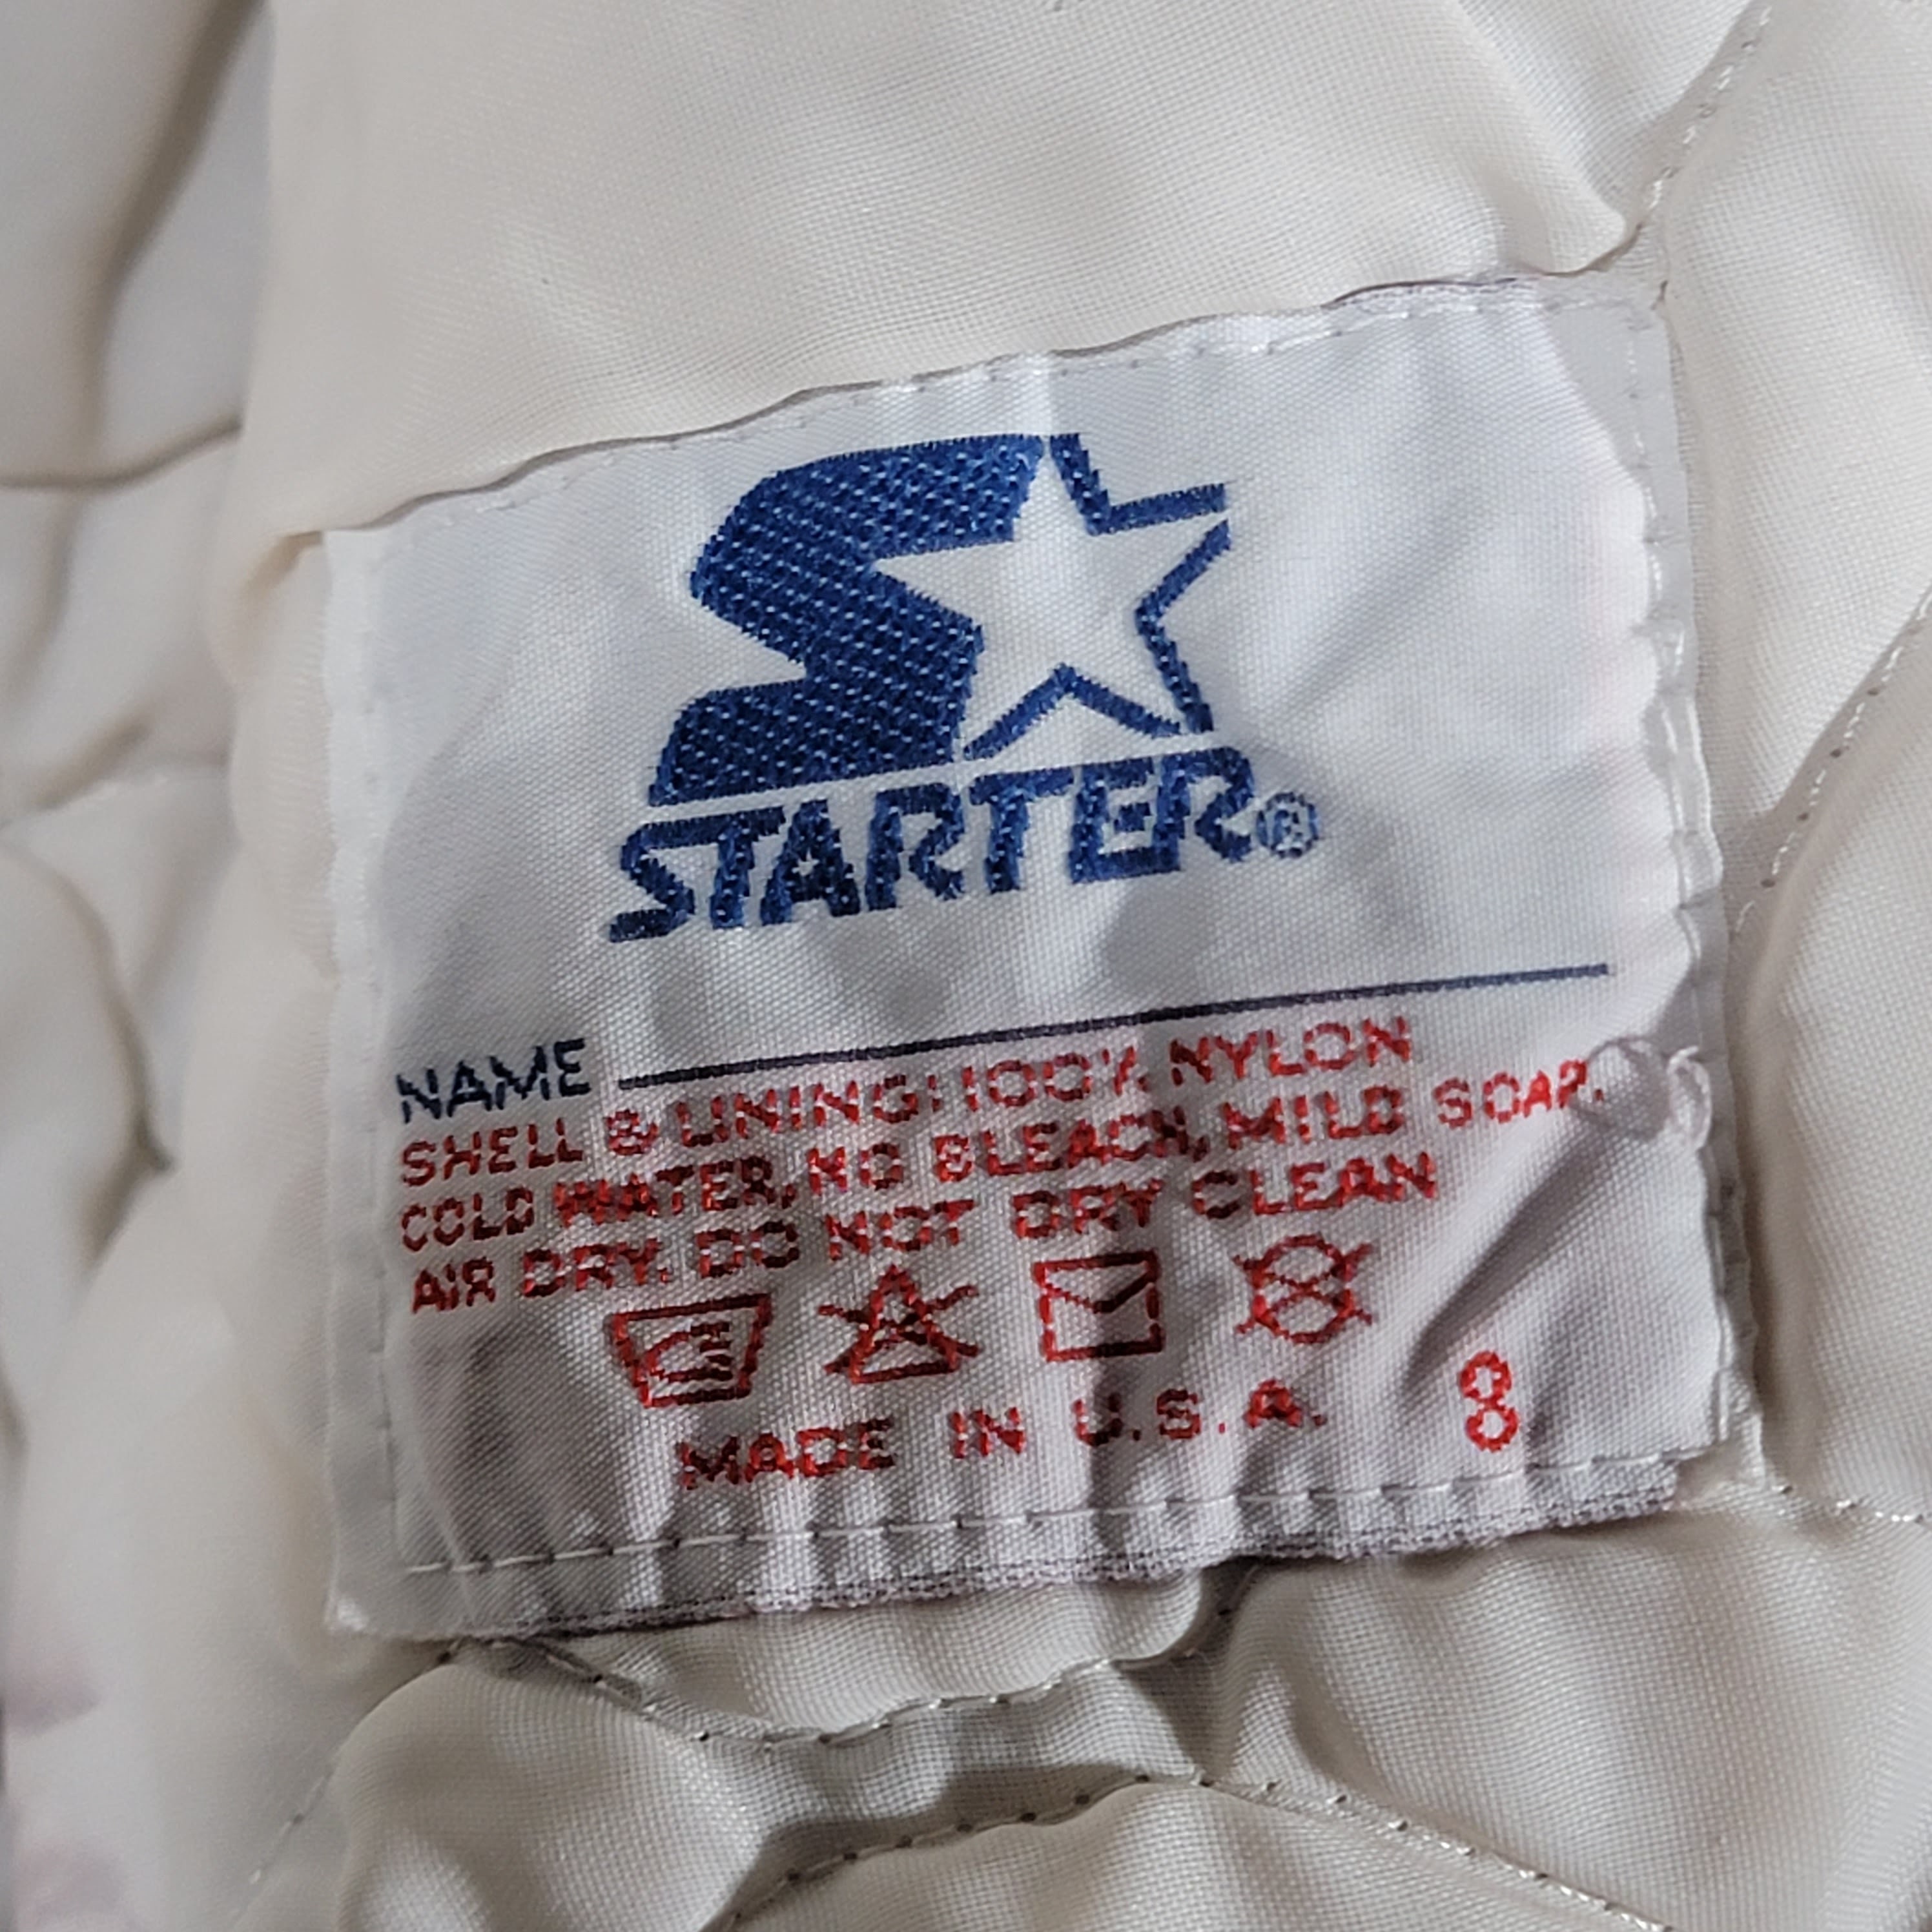 St. Louis Blues: 1986 Satin Starter Bomber Jacket (XL) – National Vintage  League Ltd.